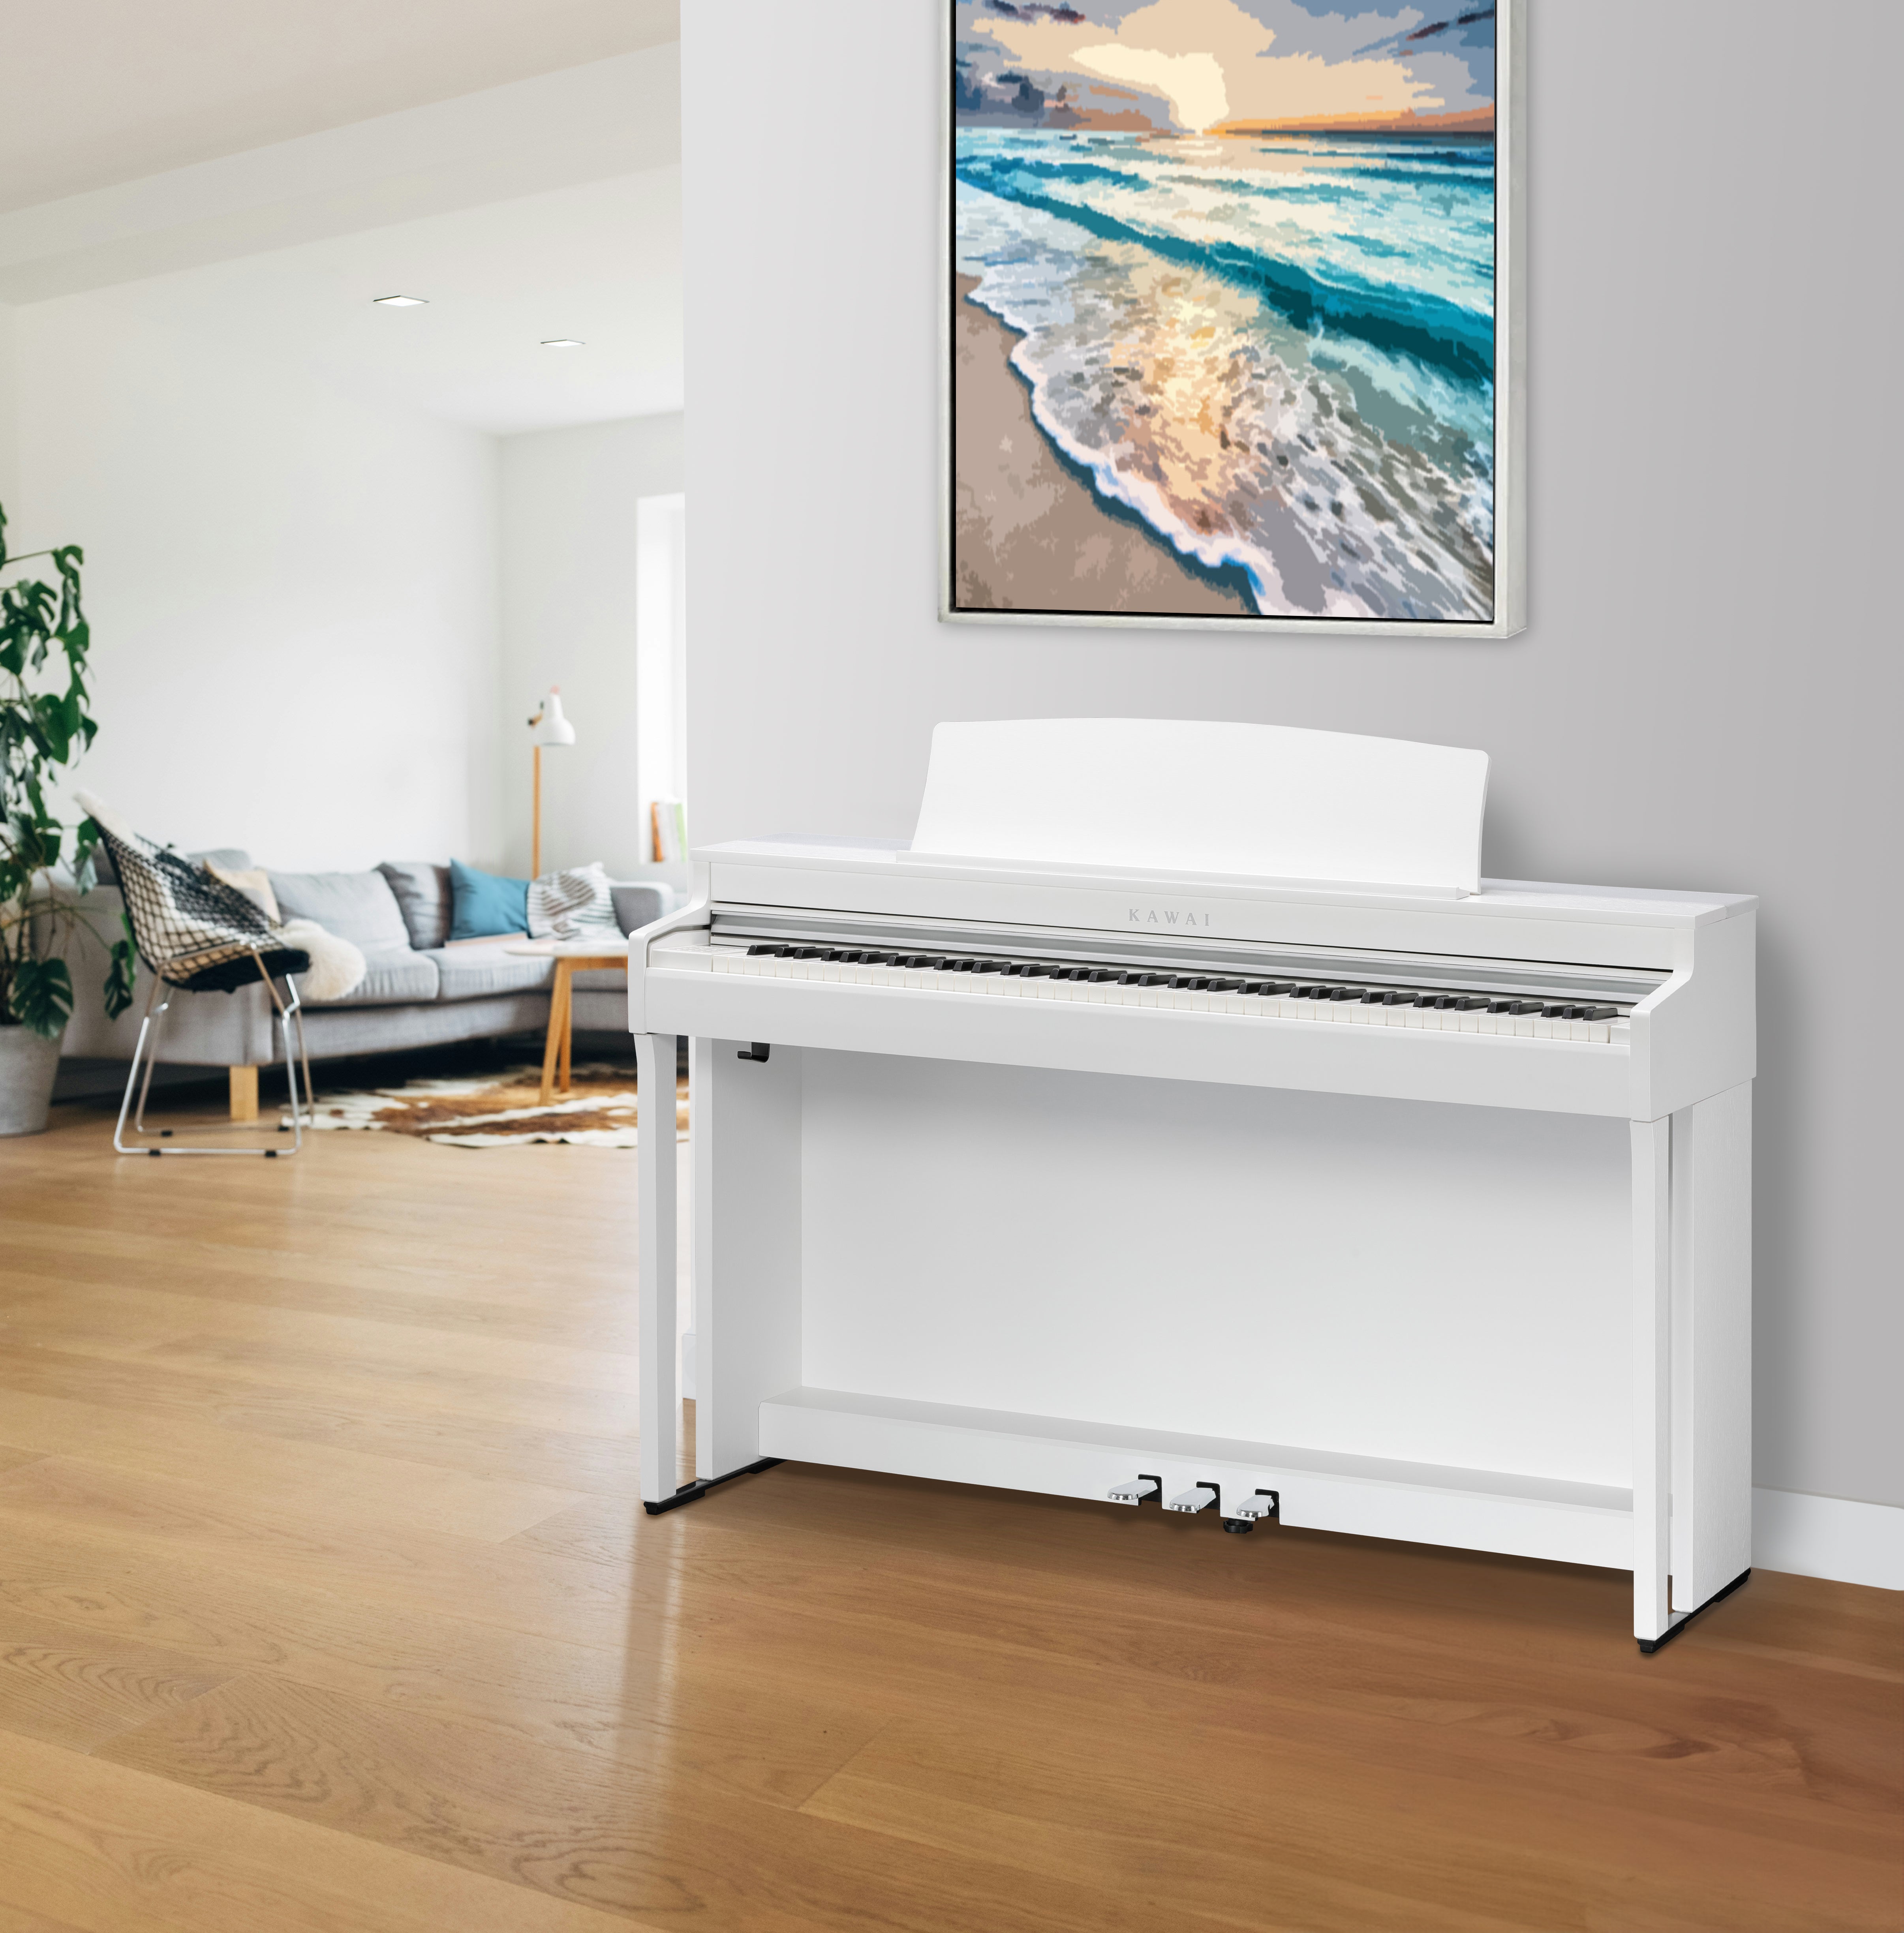 Kawai CN301 Digital Piano - Satin White - in a stylish living room